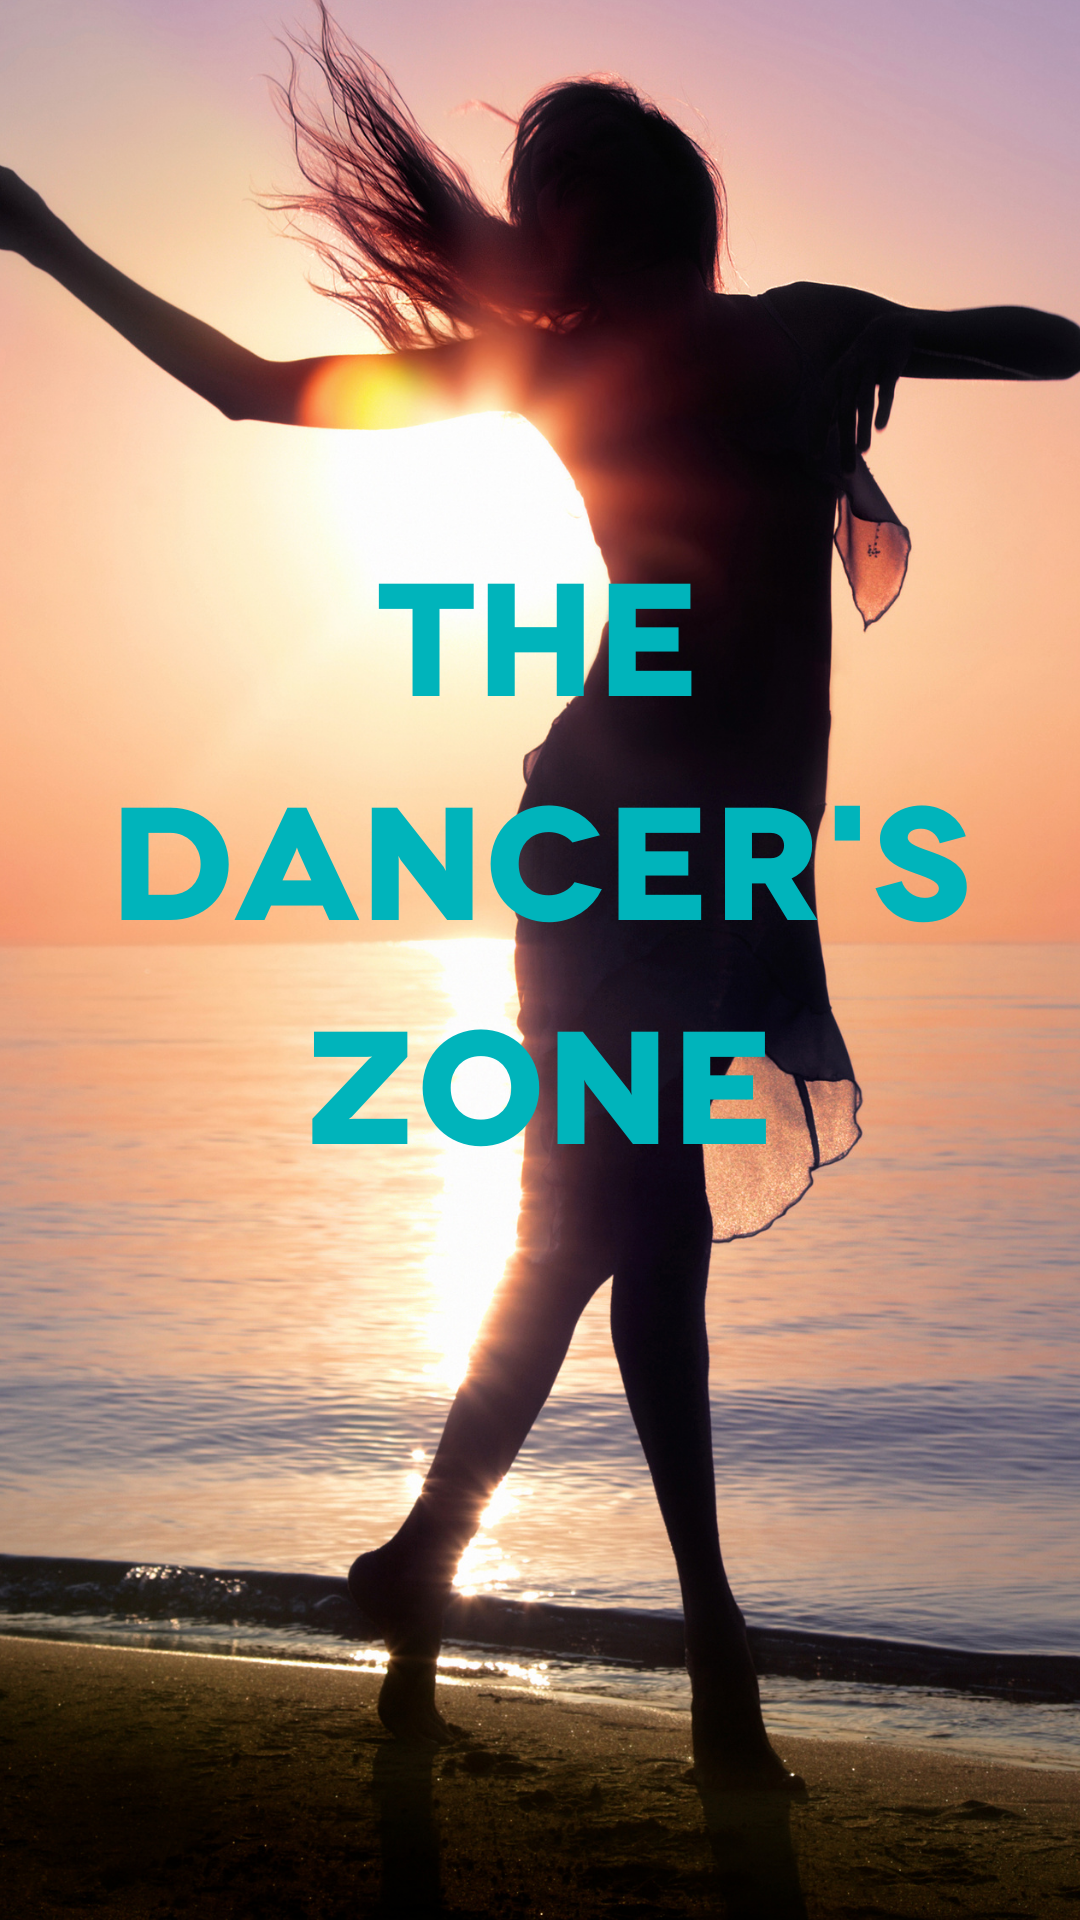 The Dancer’s Zone